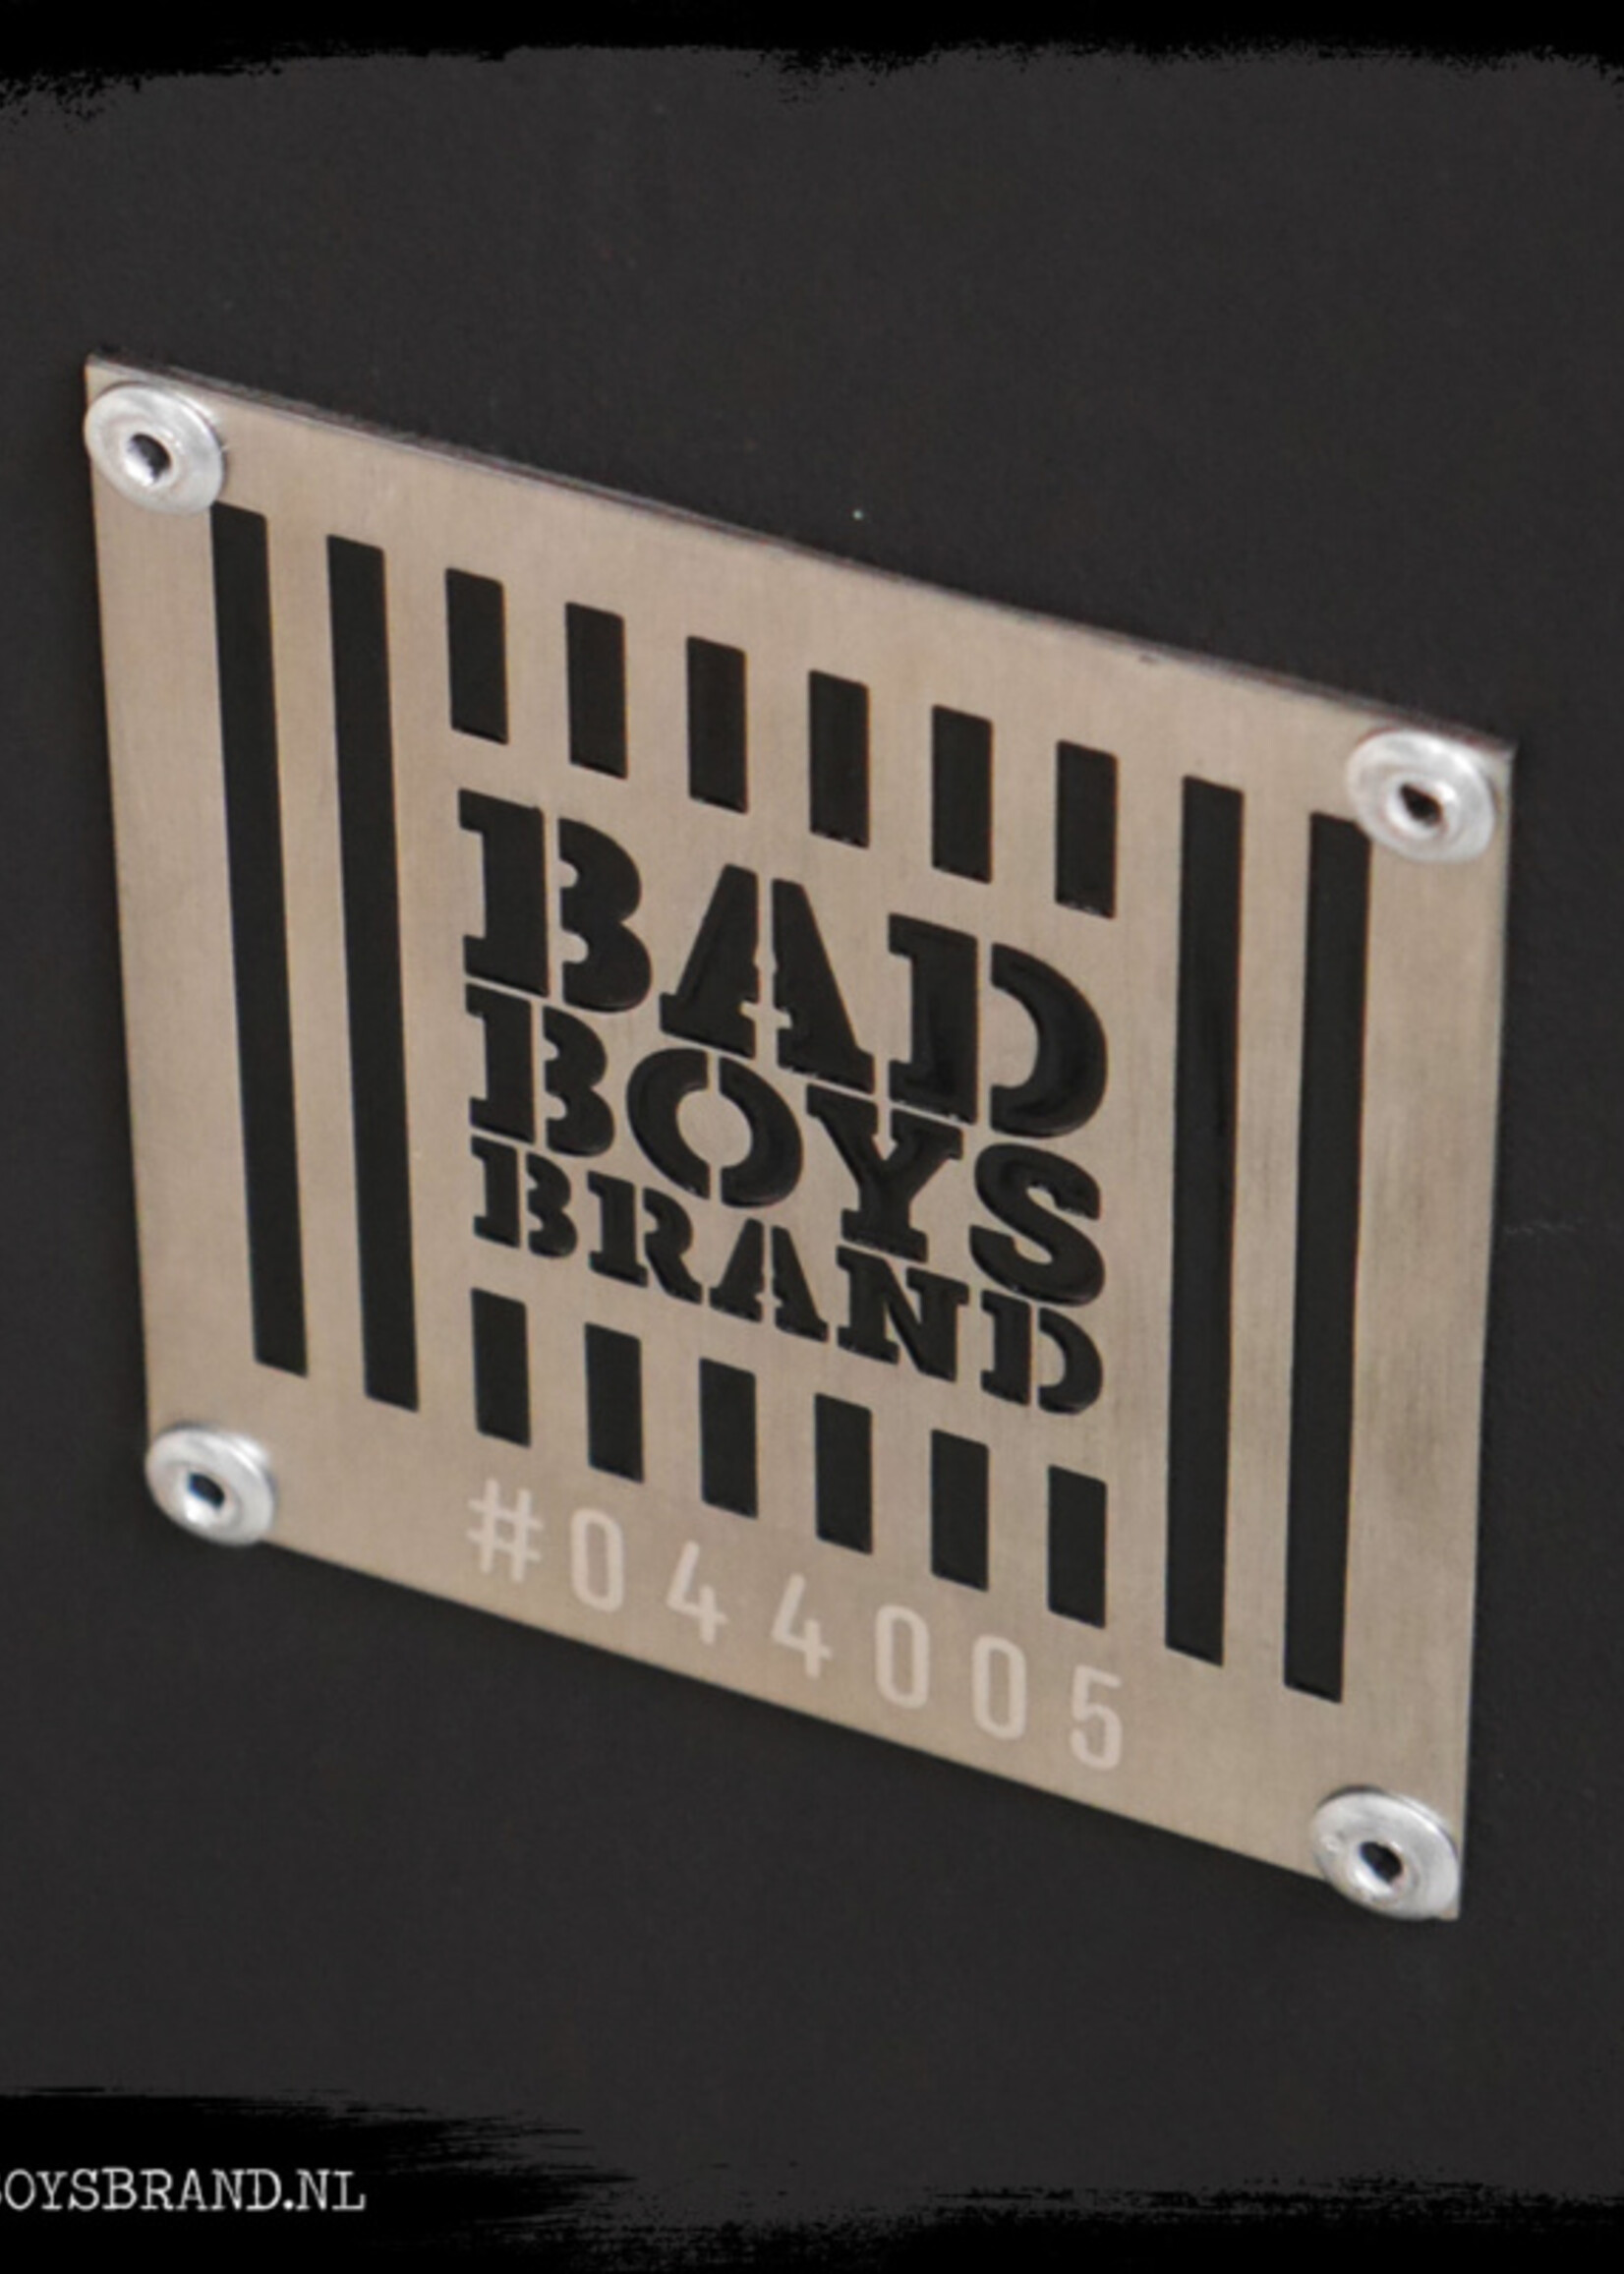 Bad Boys Brand Firestarter - fire pit 12 KG - BadBoysBrand - Steel - 100% Made in Jail